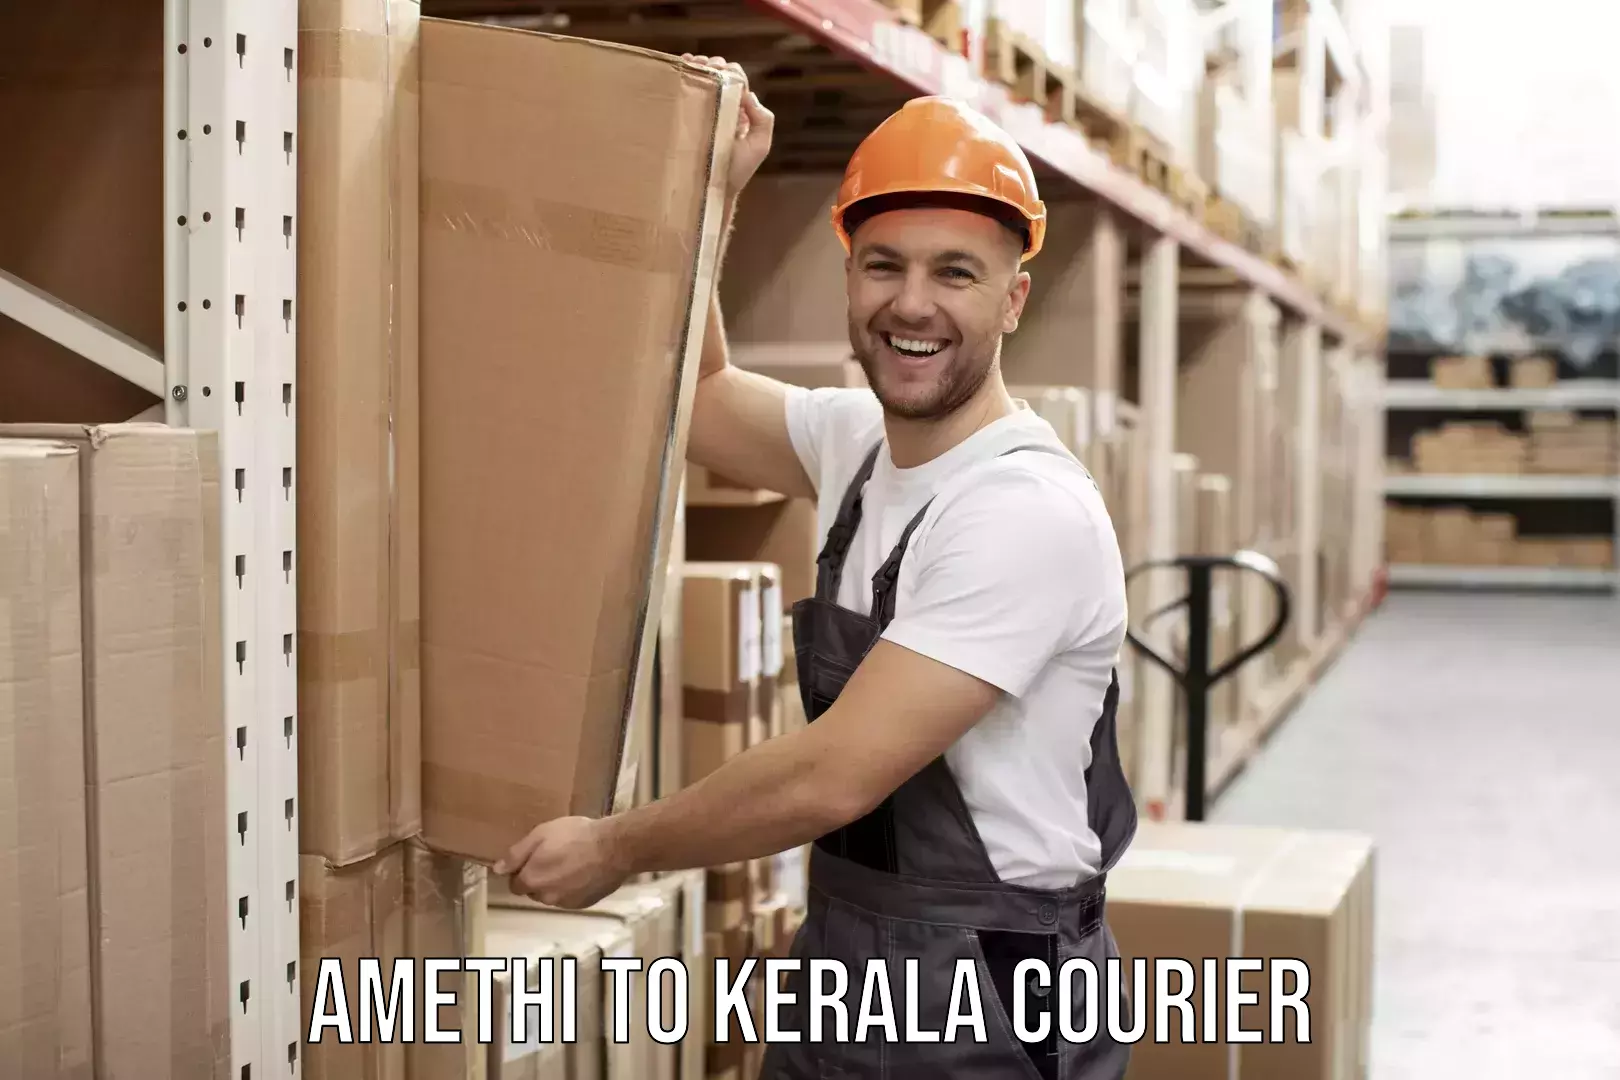 Furniture transport company Amethi to Kerala